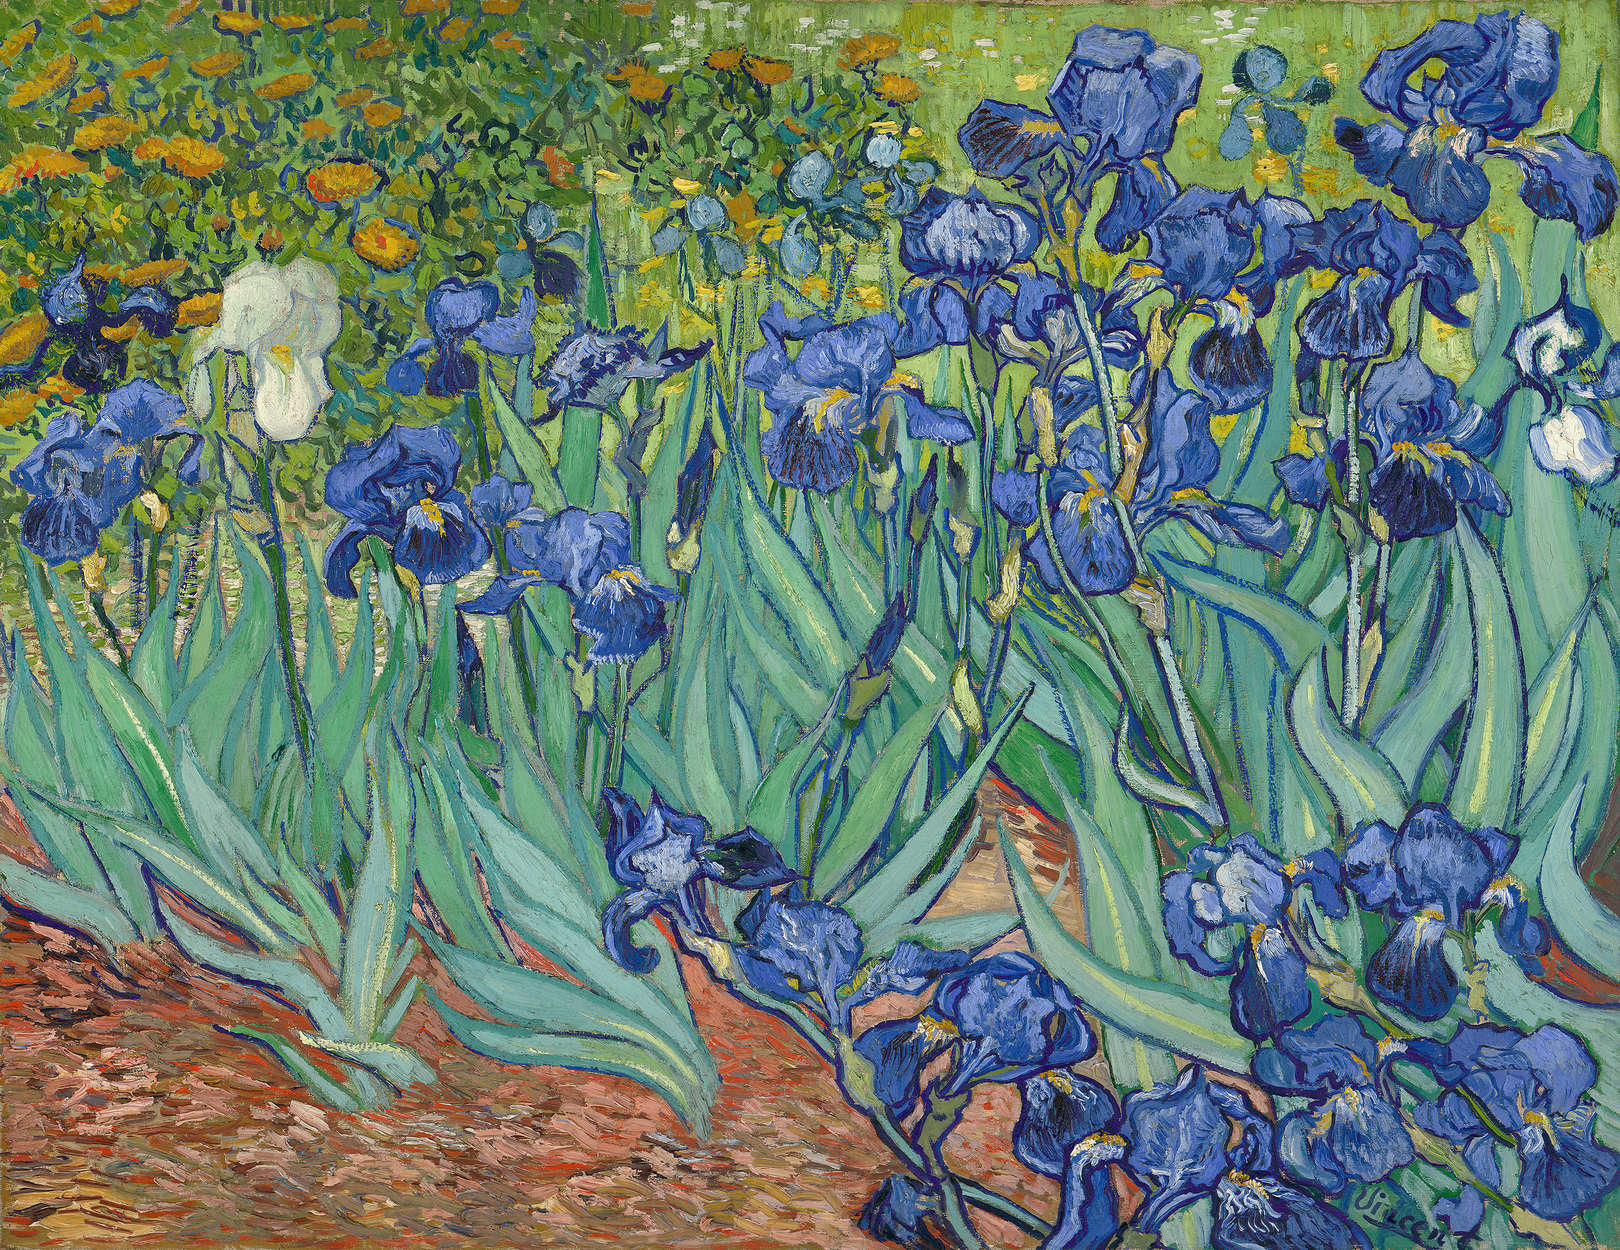             Il murale "Iris" di Vincent van Gogh
        